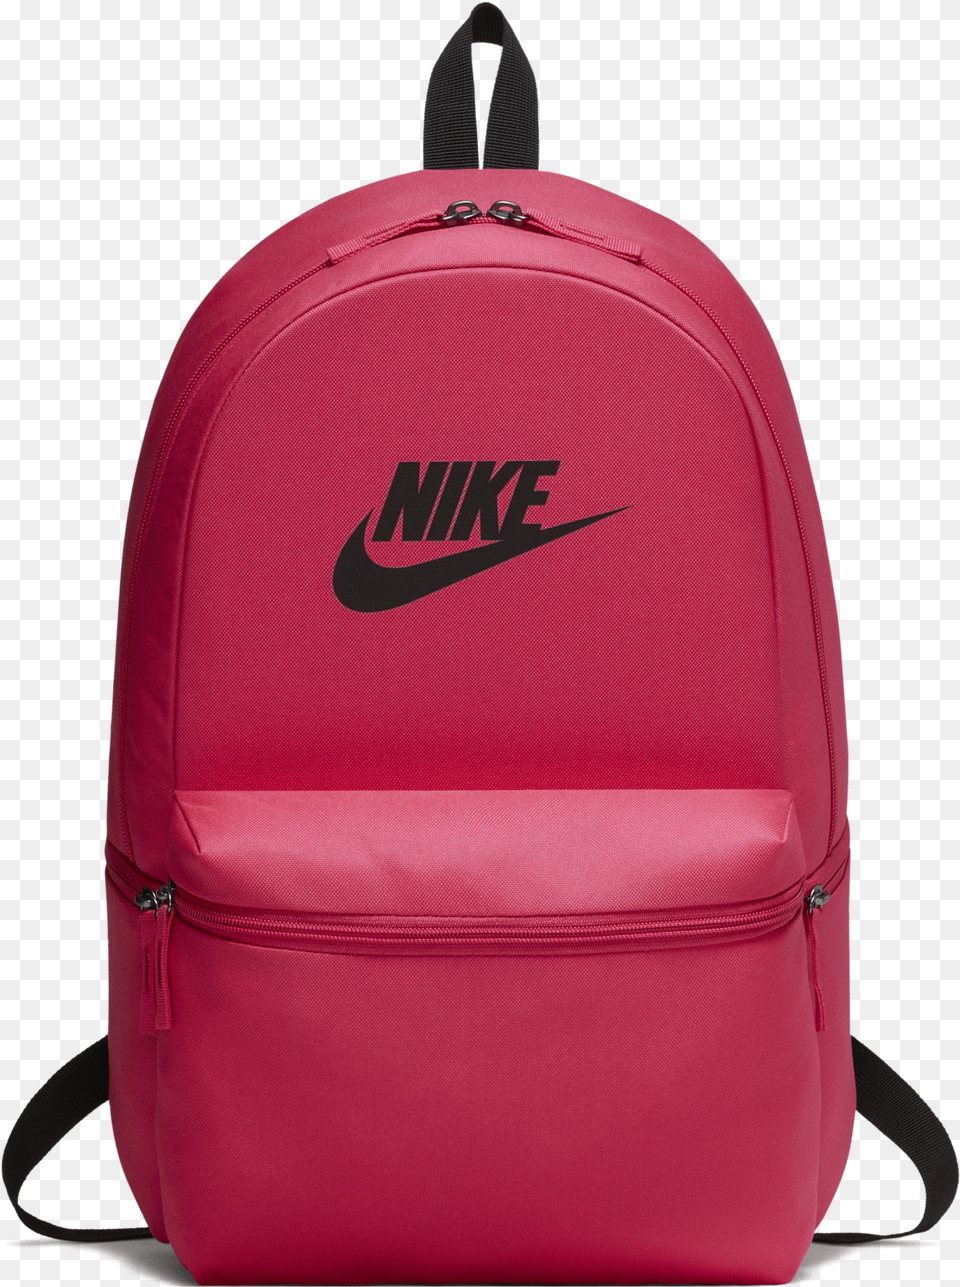 Backpack, Bag, Accessories, Handbag Png Image